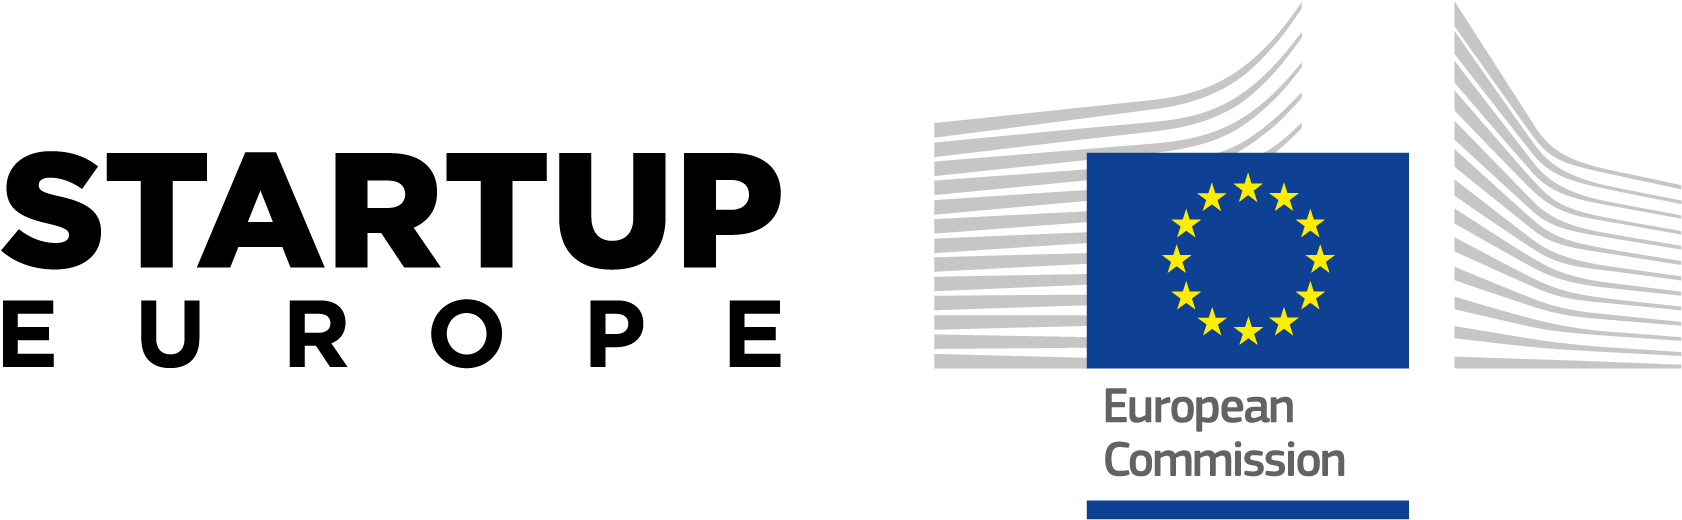 Startup Europe European Commission Logo PNG image